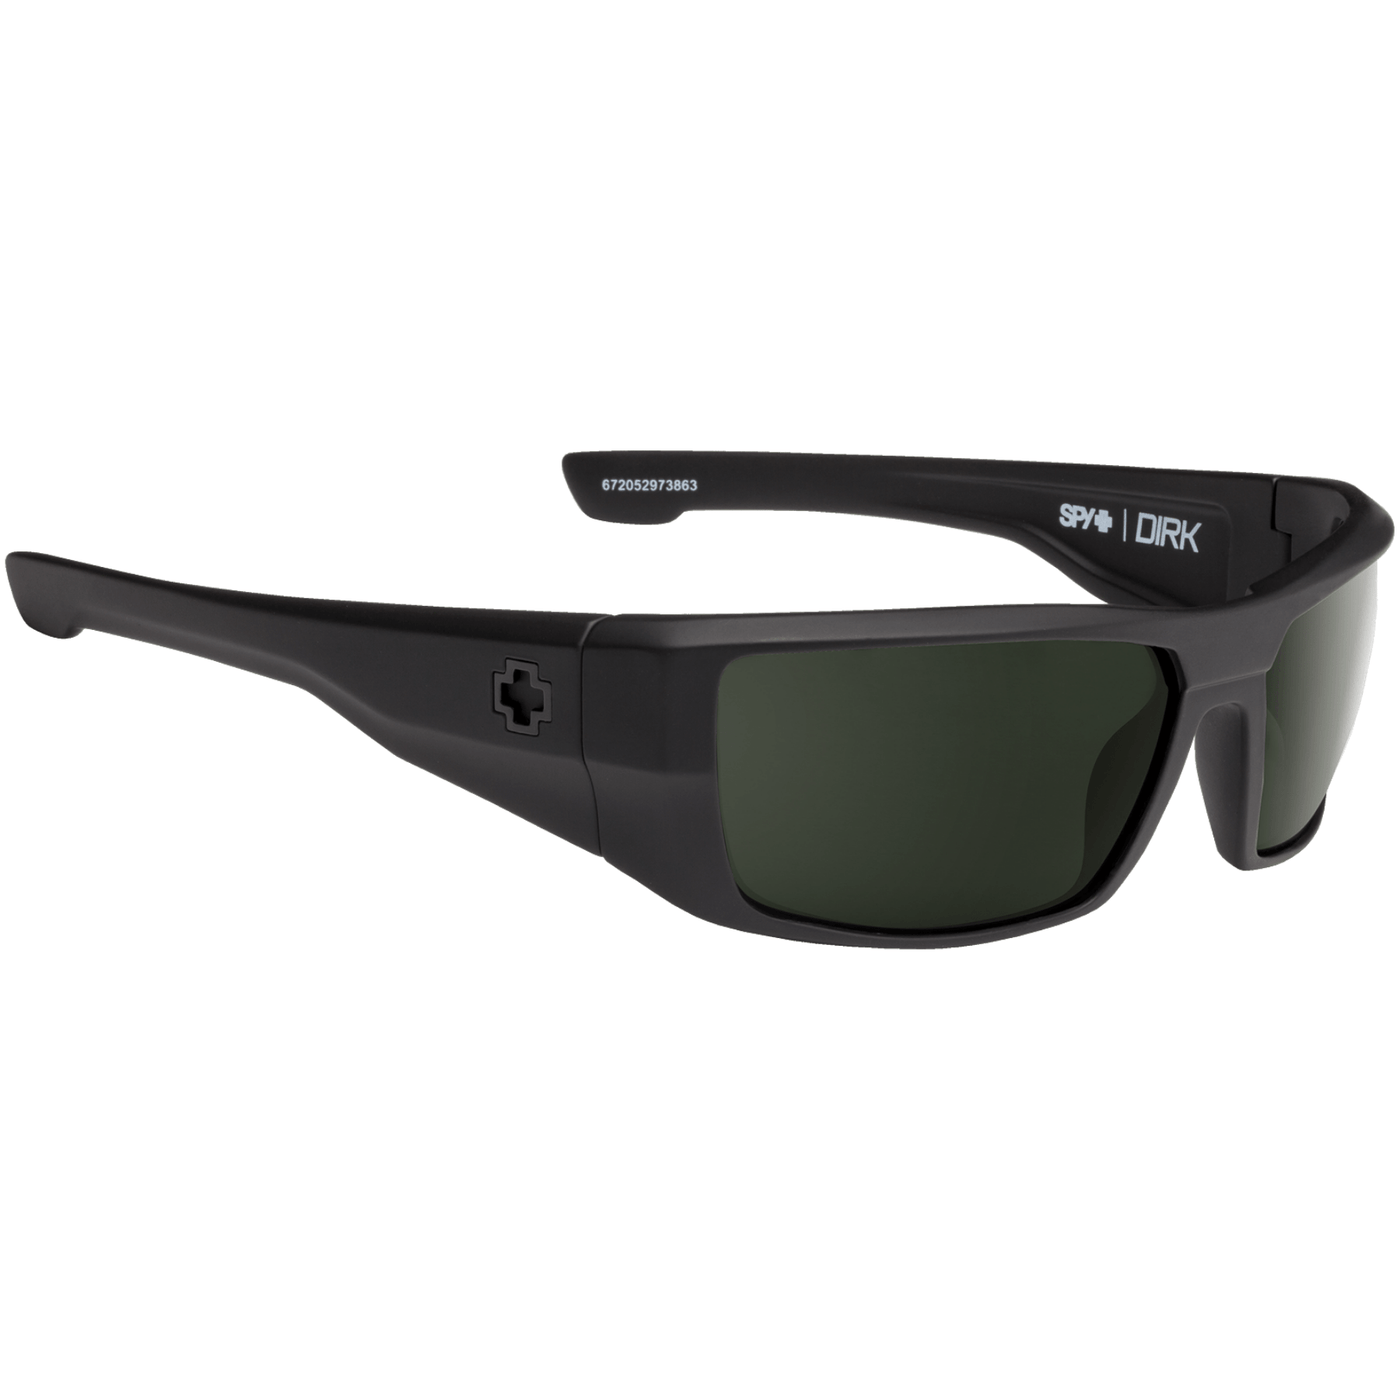 SPY DIRK Sunglasses, Happy Lens - Soft Matte Black 8Lines Shop - Fast Shipping